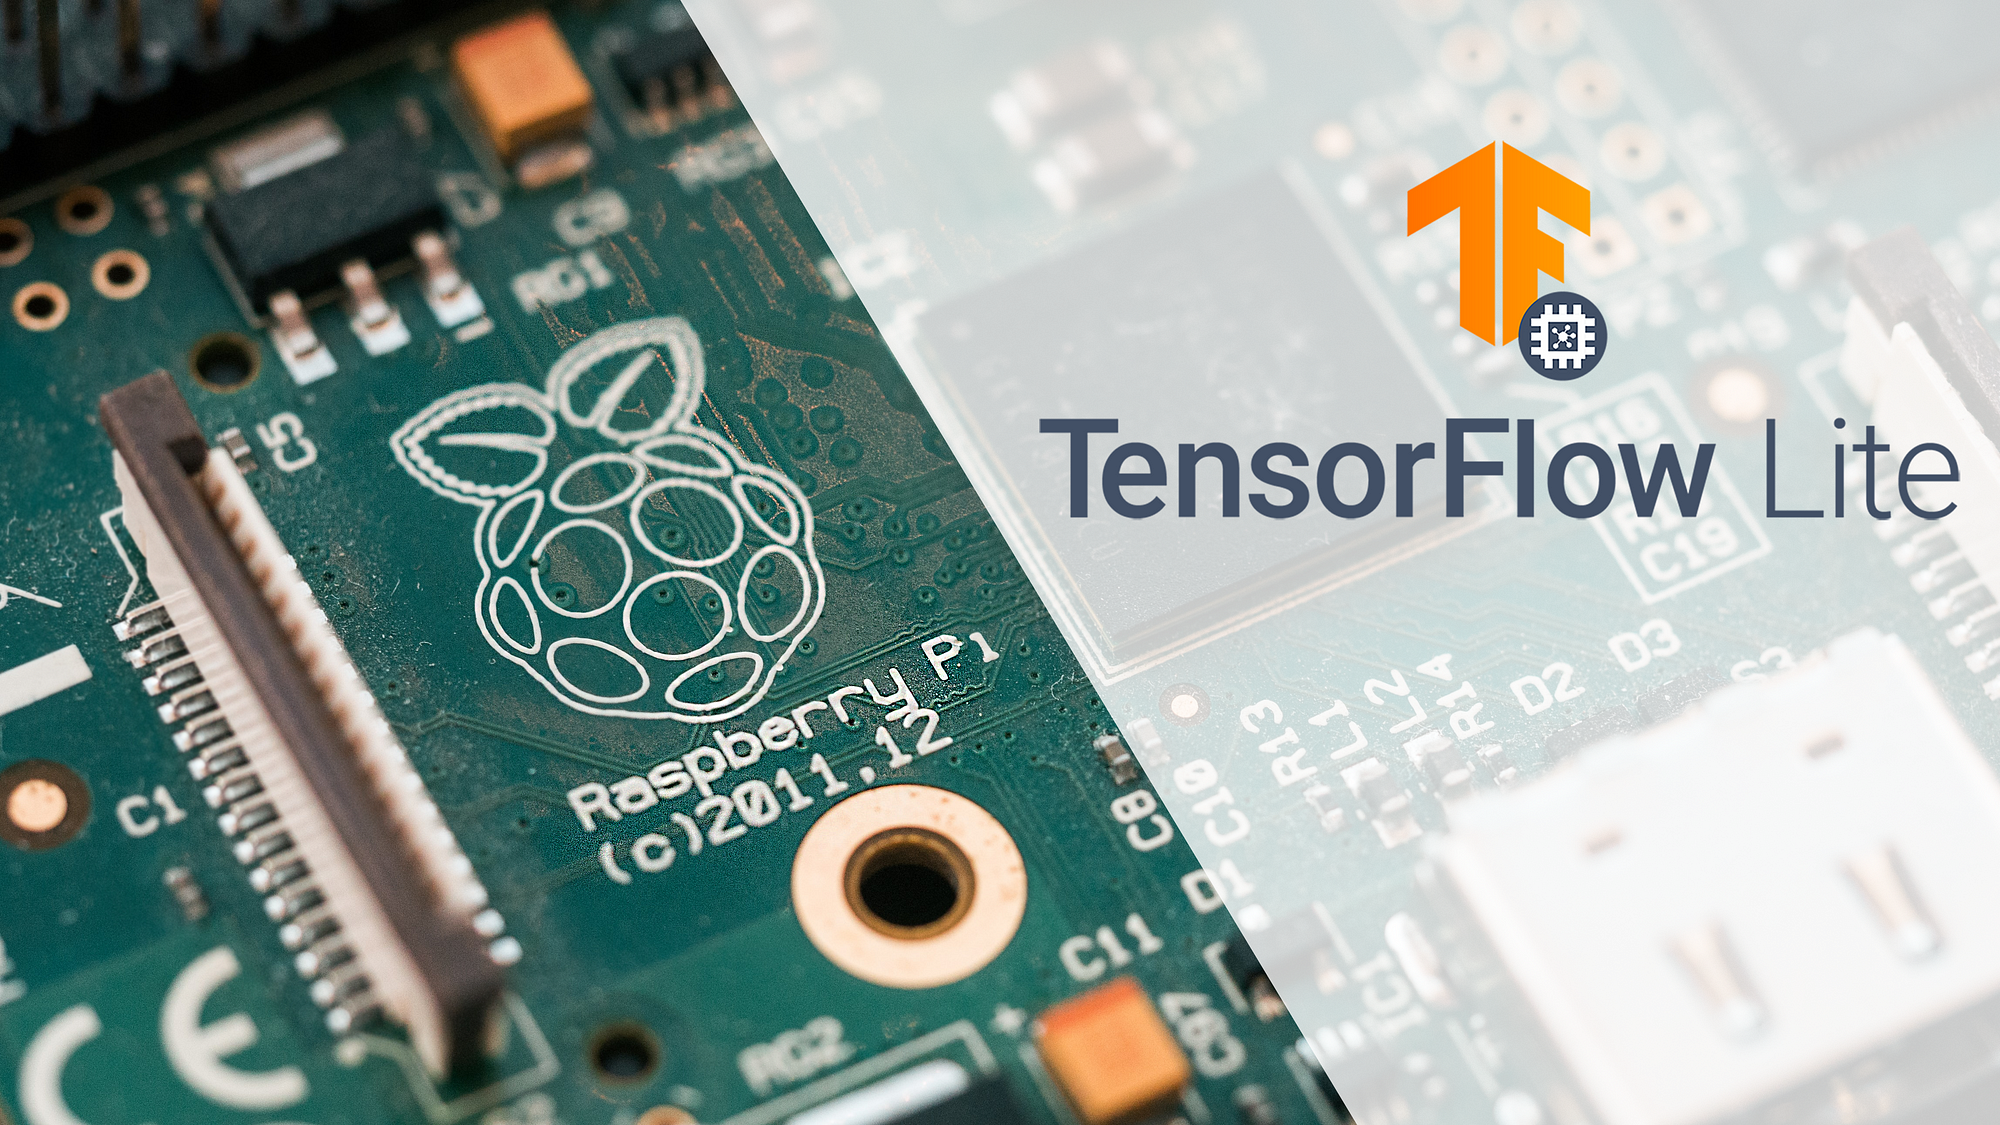 Installing TensorFlow Lite on the Raspberry Pi?